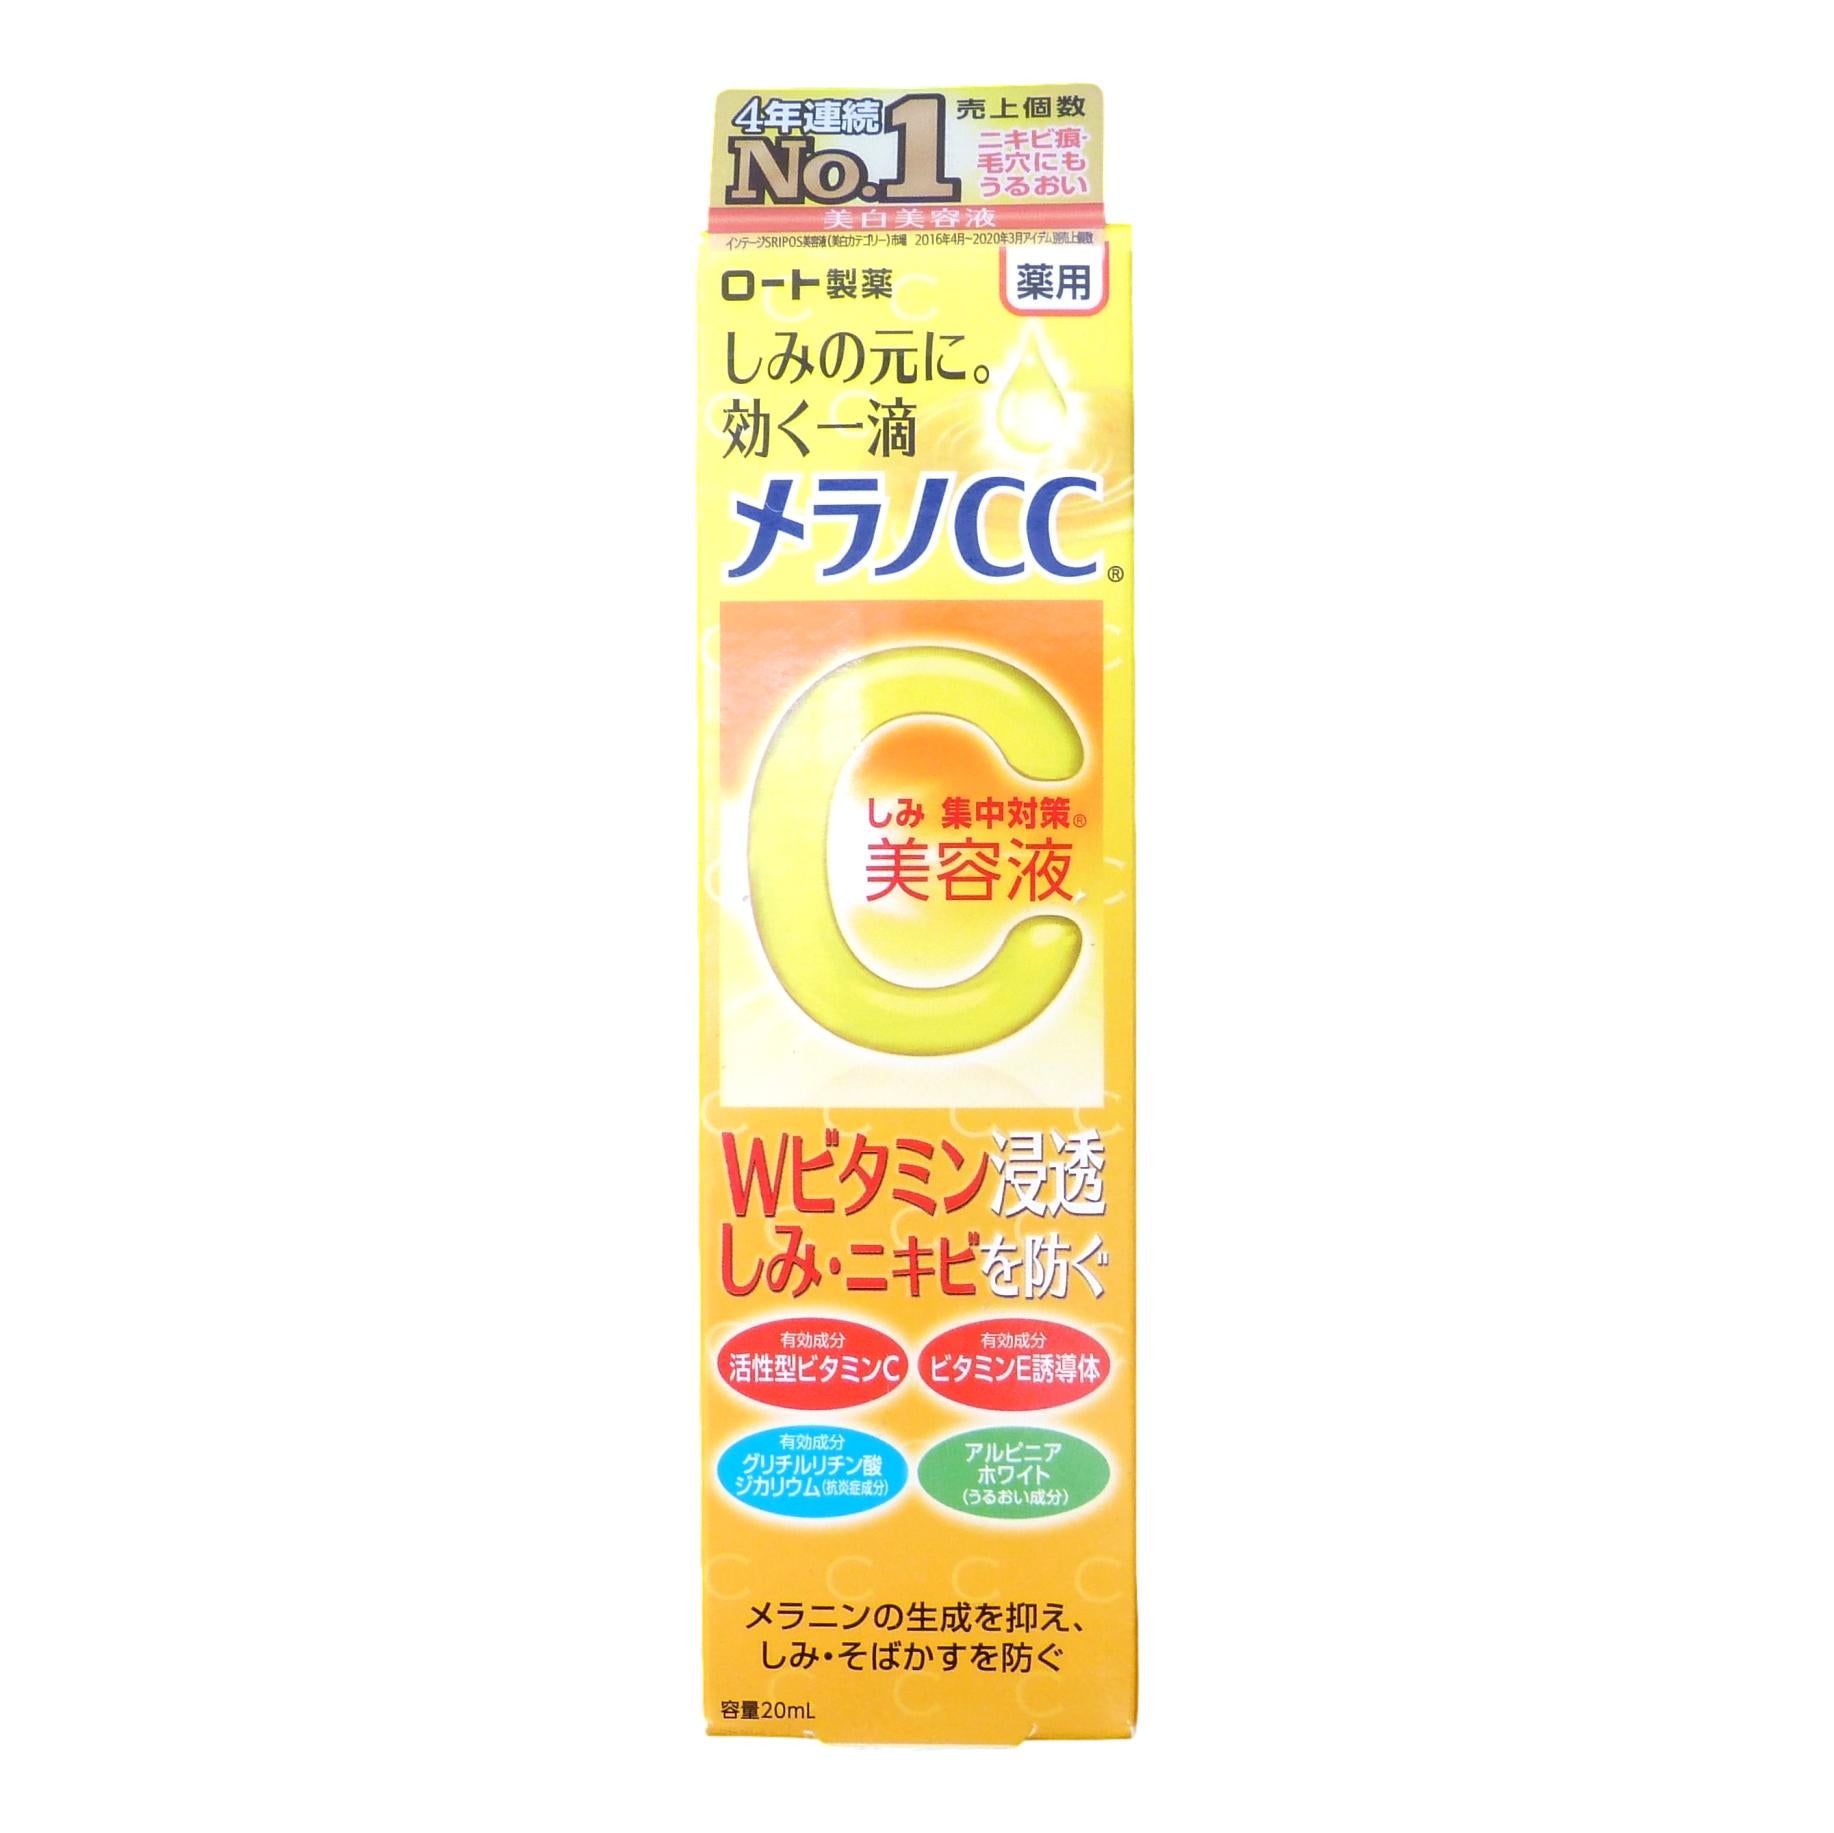 Rohto Melano CC Intensive Anti-spot Essence 20ml (Japan Version) - Asian Beauty Supply